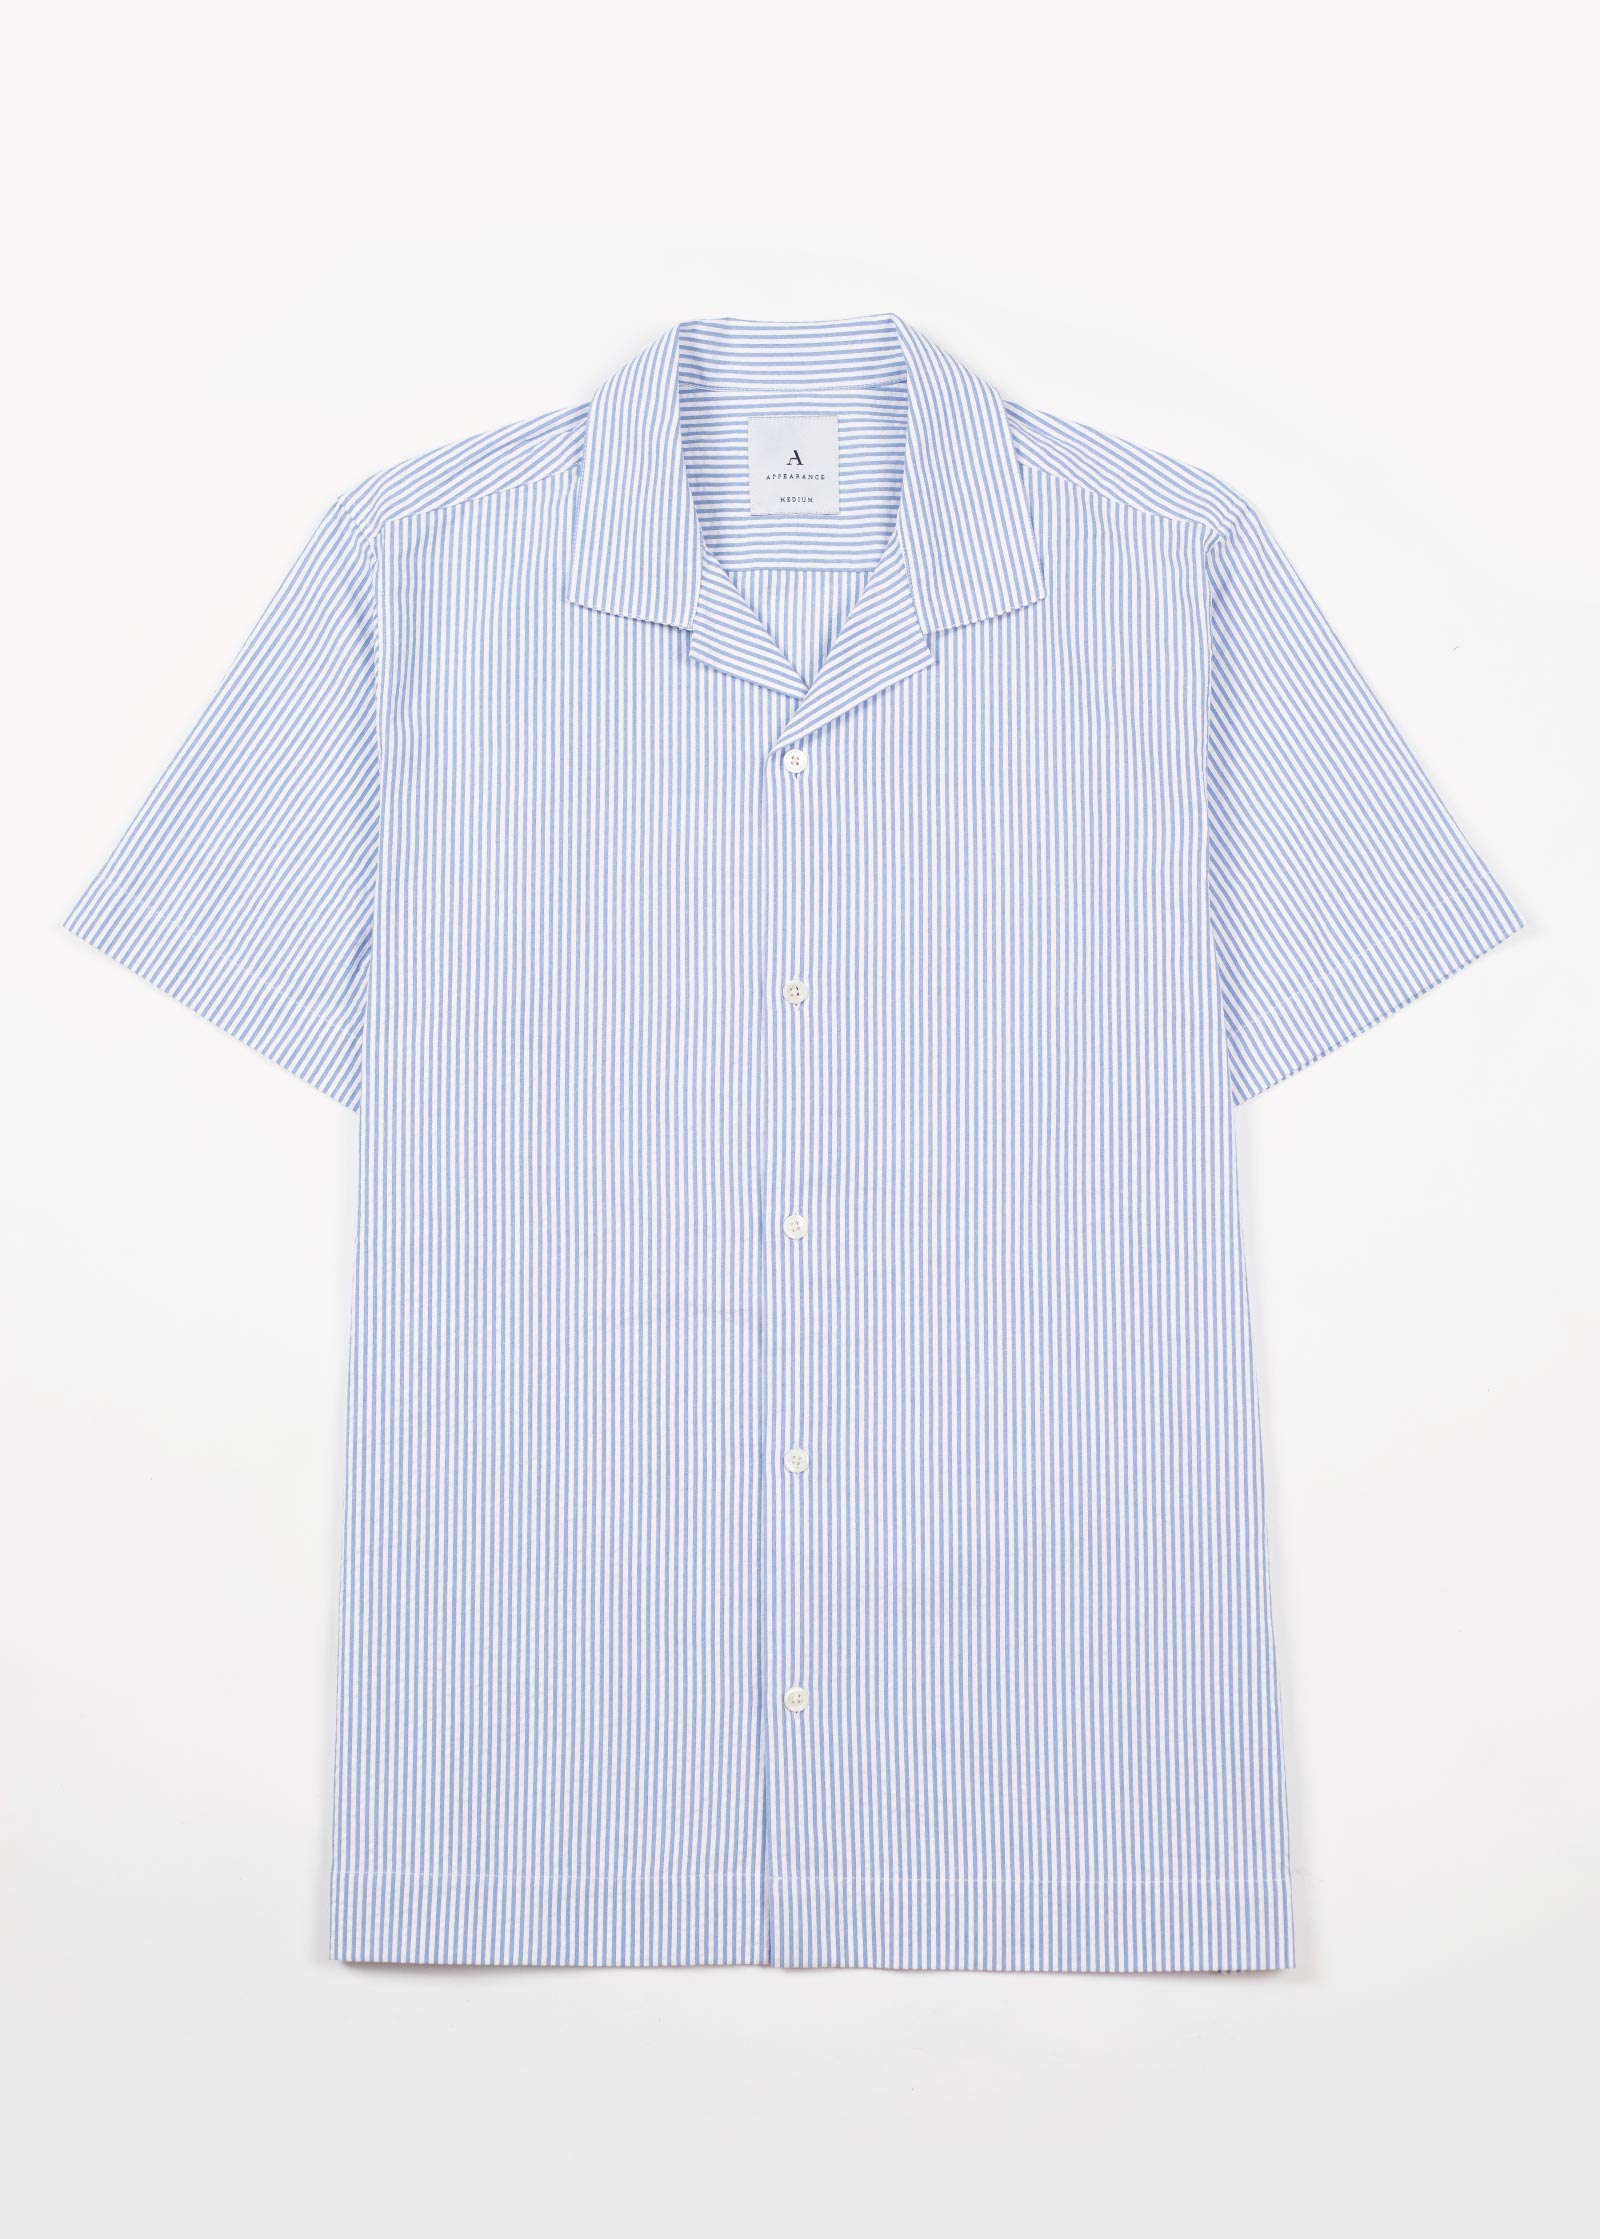 Appearance-An-Ivy-Seersucker-Shirt-Skjorte-Camp-Collar-Sommer-Maend-Herre-Men-Blaa-Stribet-Blue-Striped-White-Summer